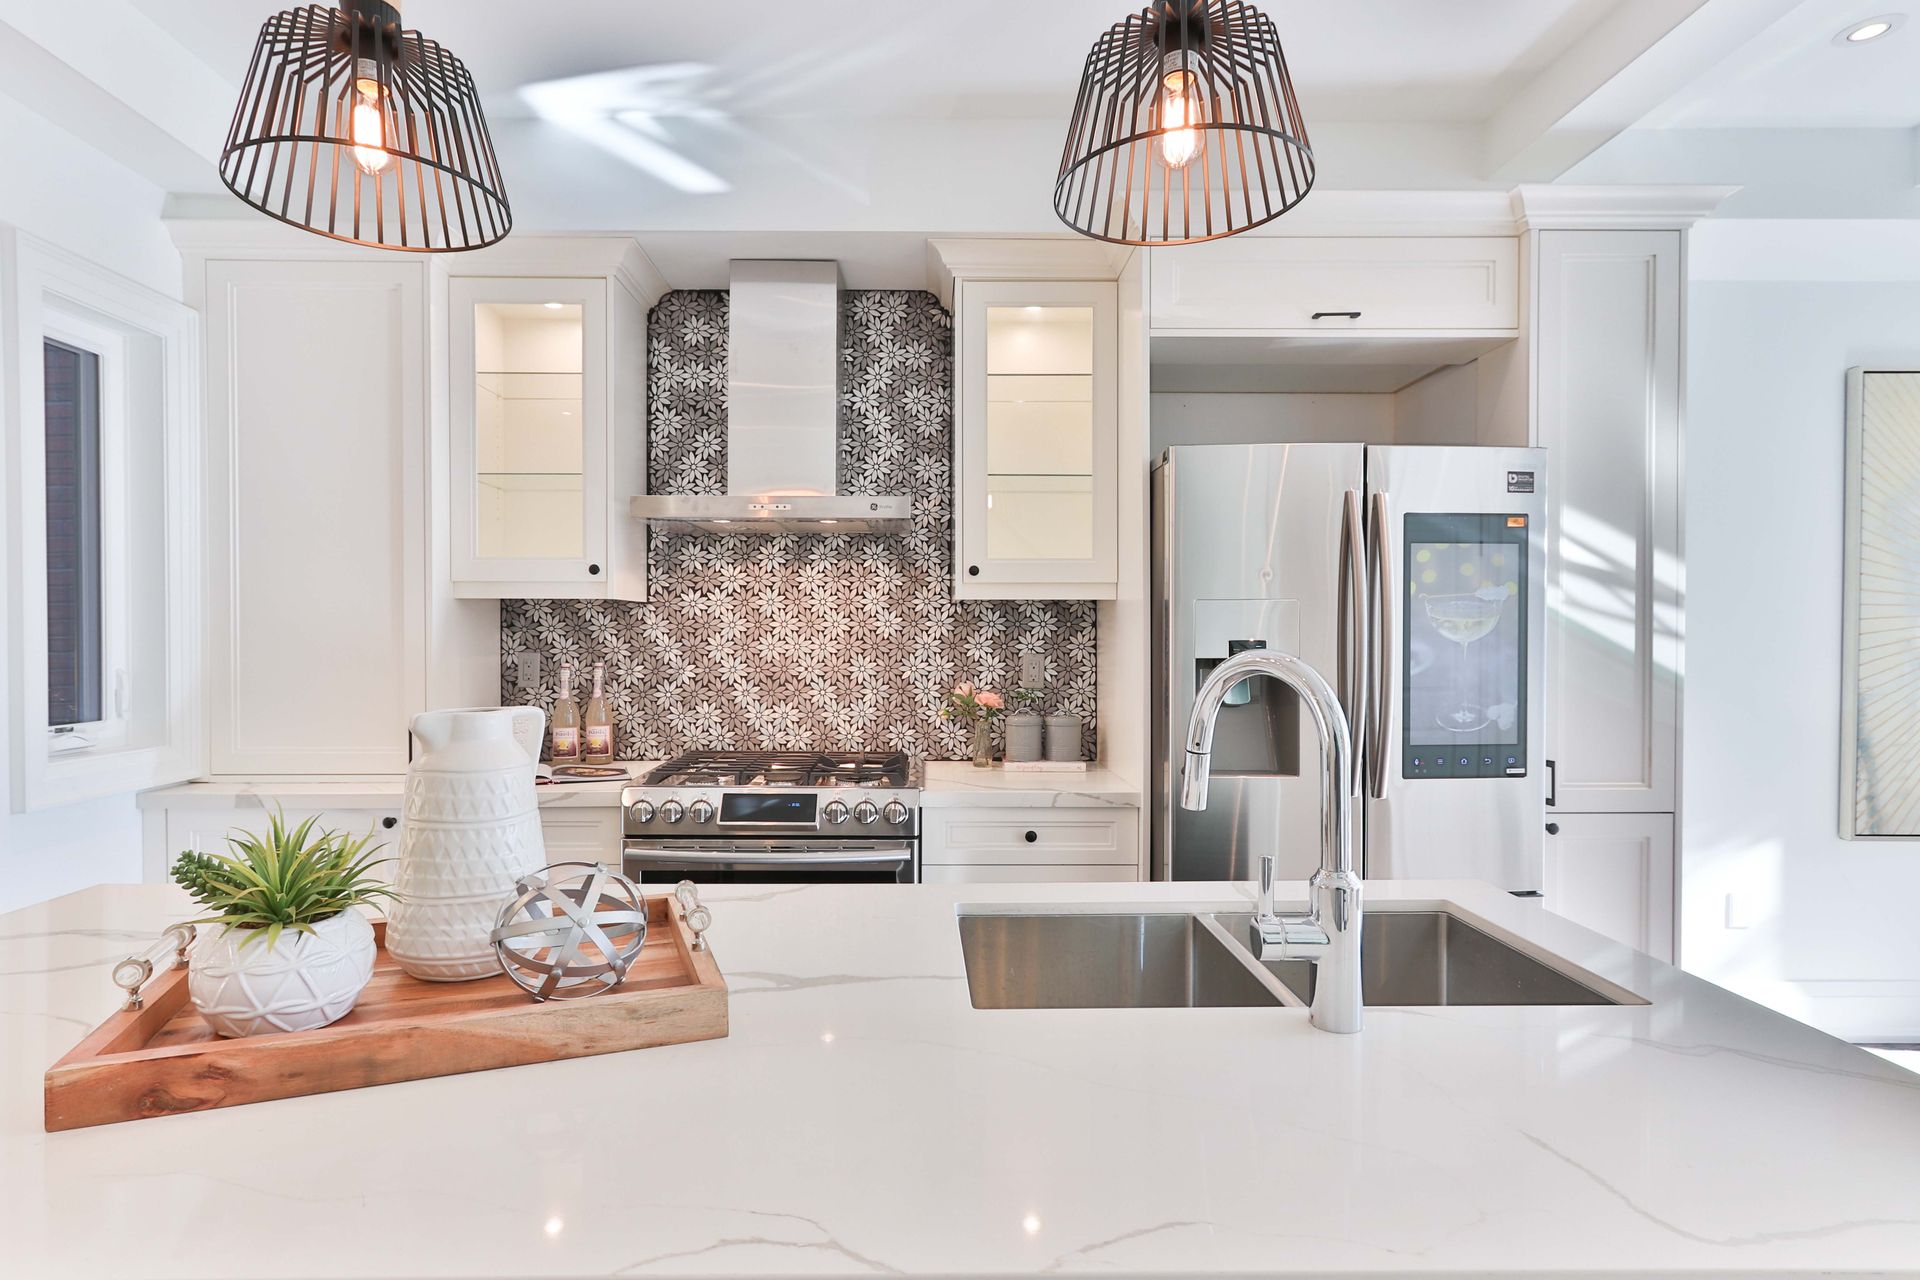 Modern kitchen with stylish pendant ceiling lights illuminating the island.